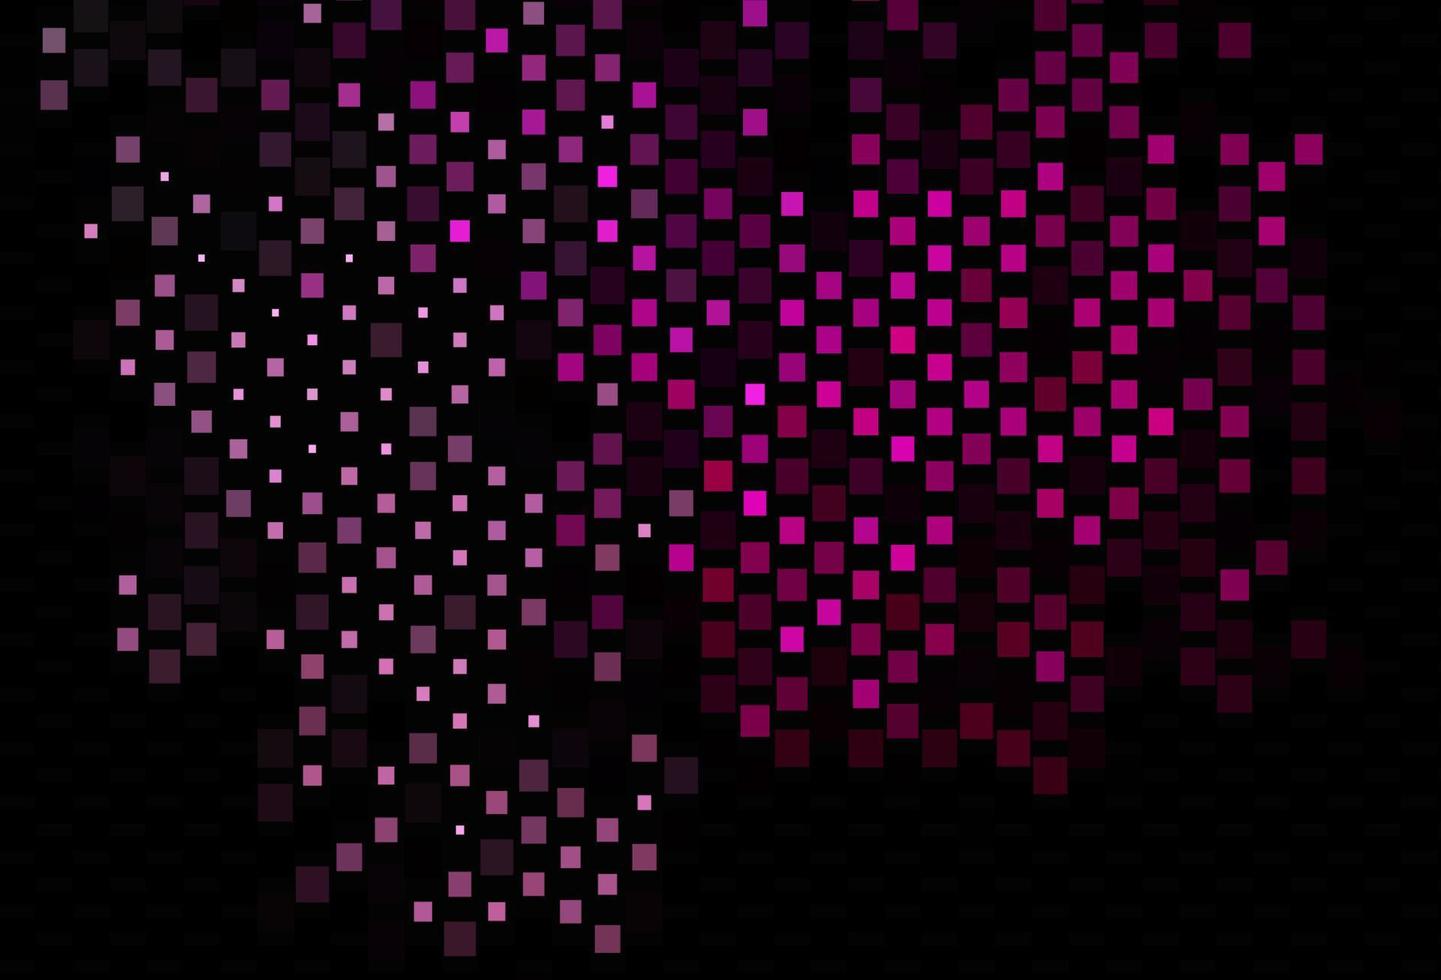 capa de vetor rosa escuro com estilo poligonal.